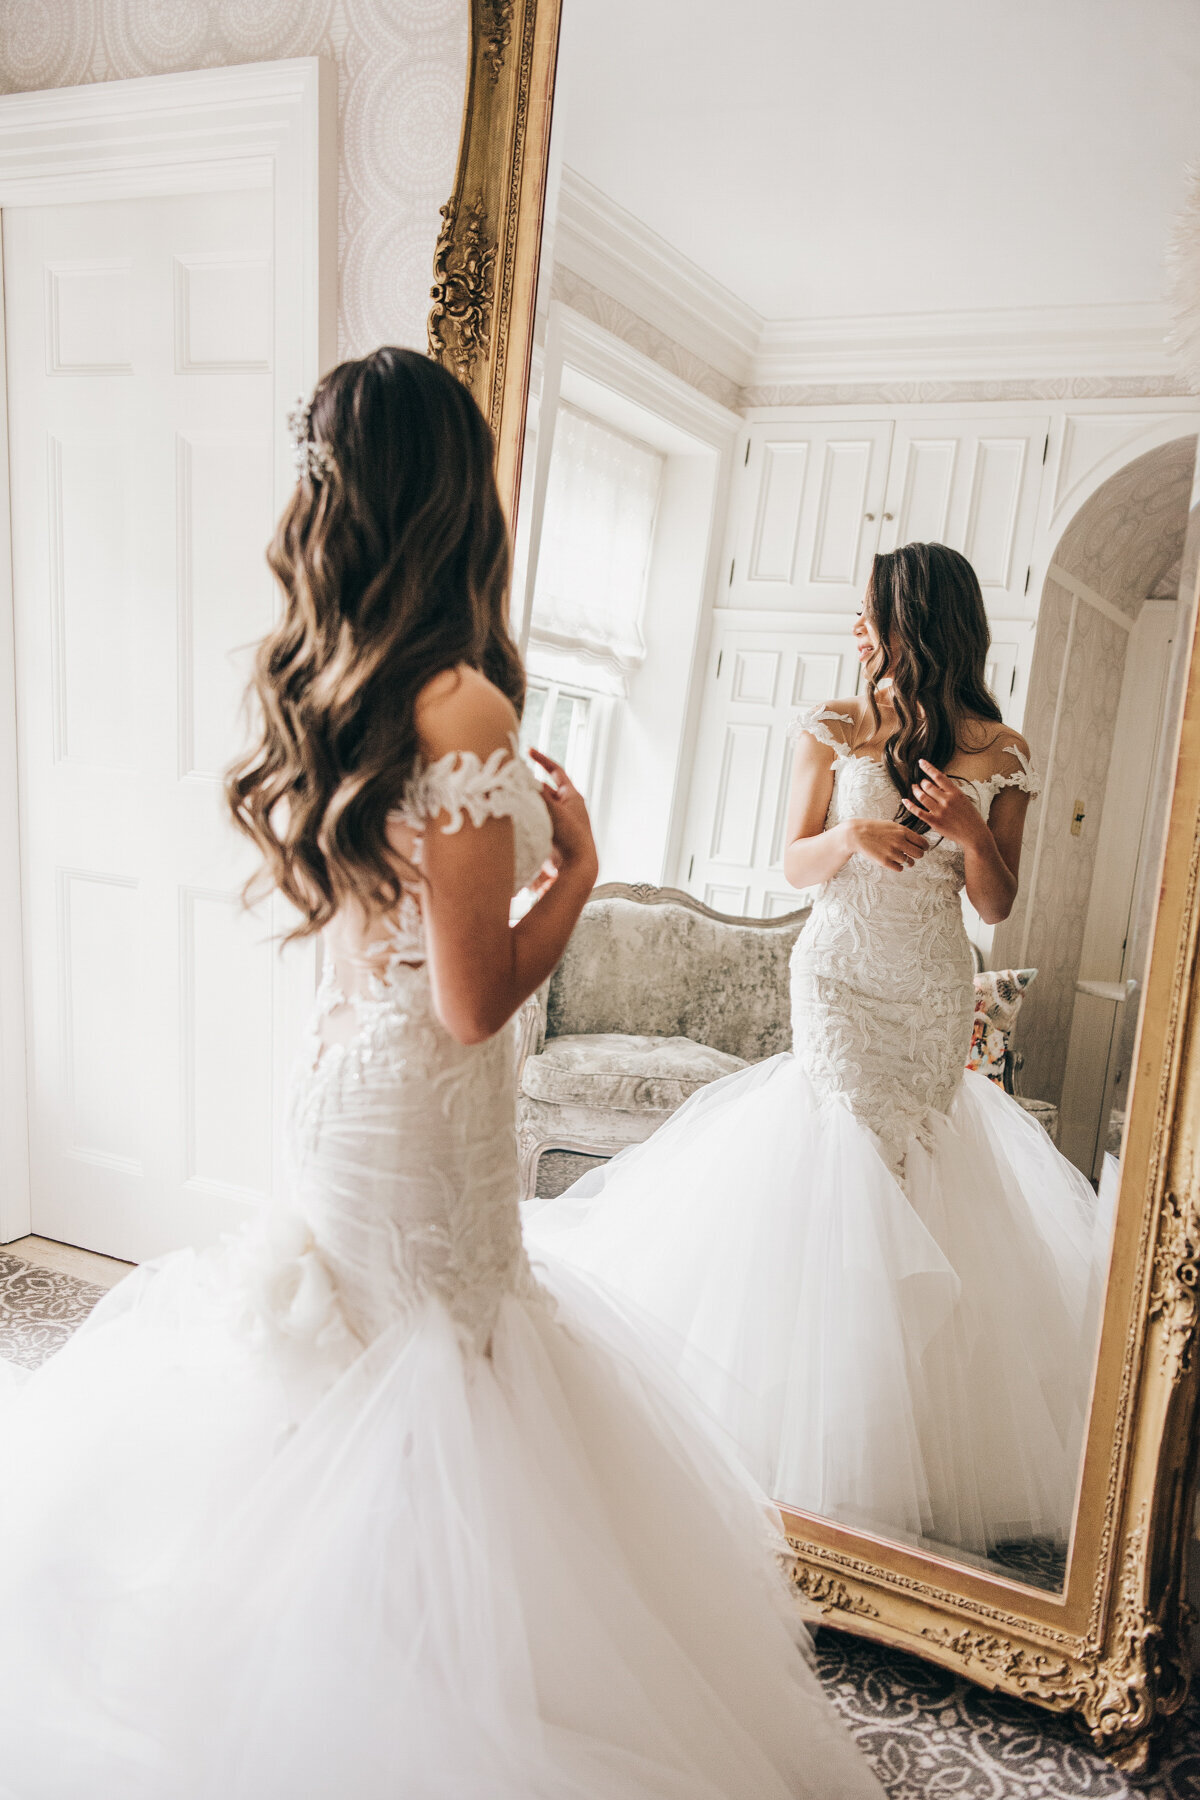 Glamorous bridal portraits in mirror photographed by Nova Markina